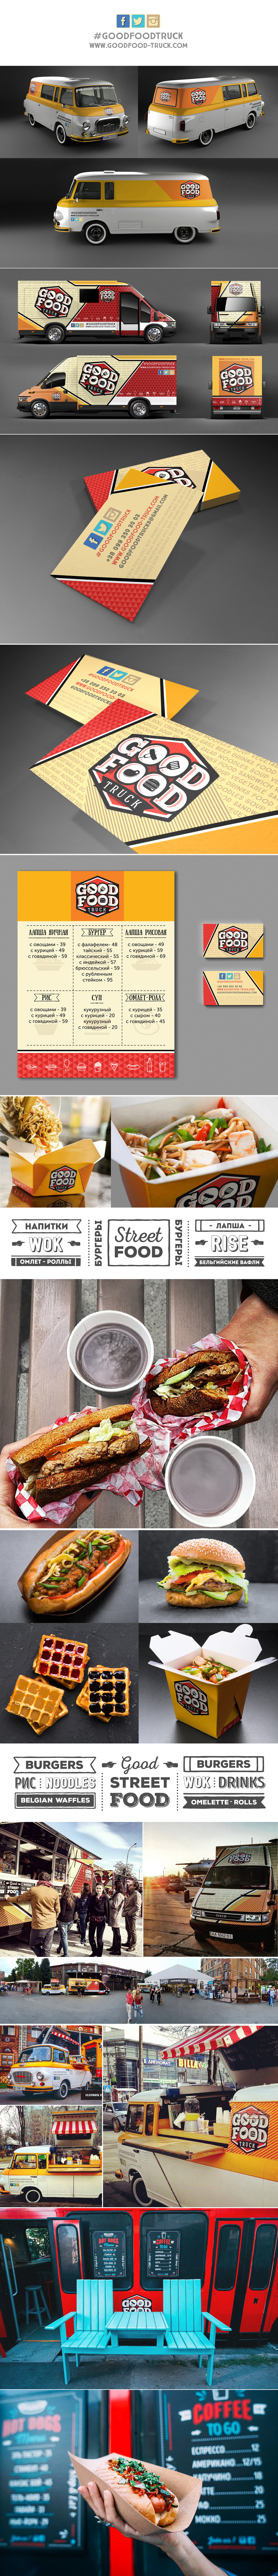 Food truck design Good Food Truck barkas IVECO Food  burger noodles wok Waffles sanwich